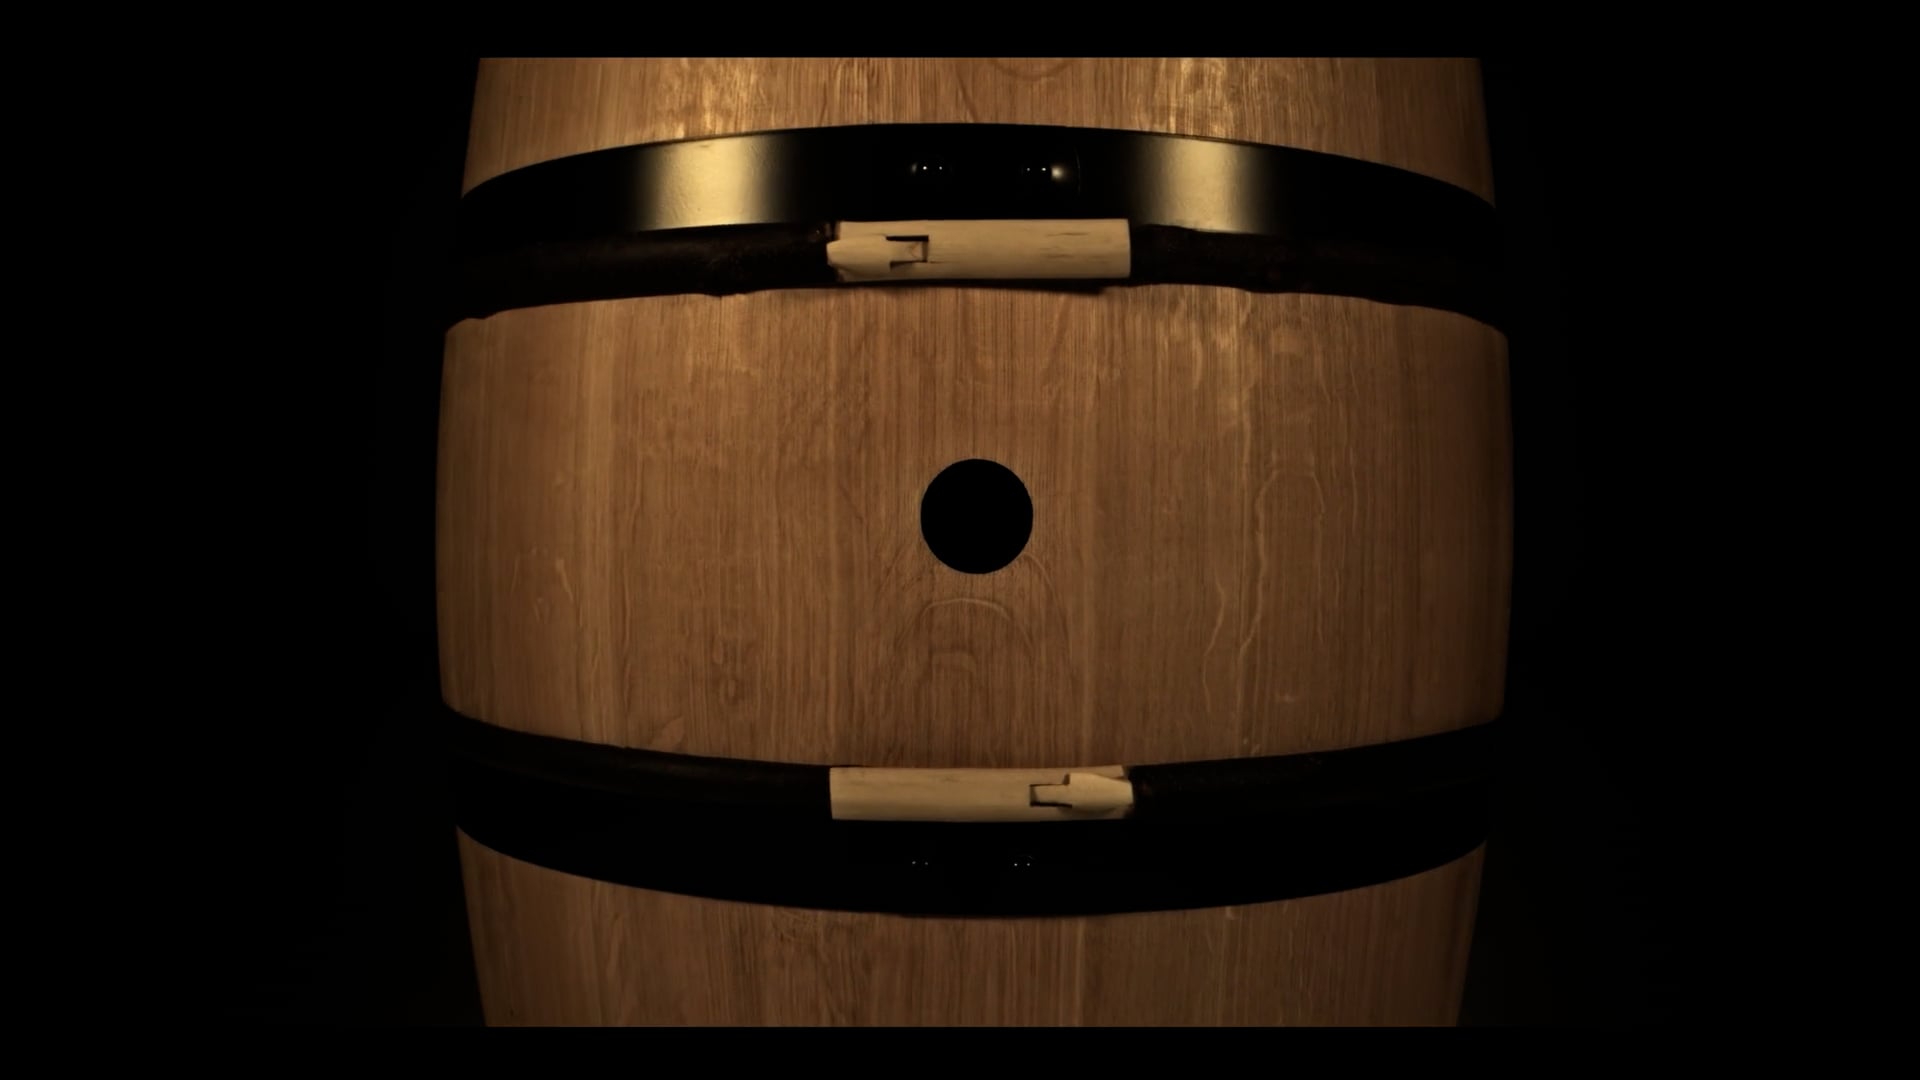 Quintessence Inside the Barrel (Digital)